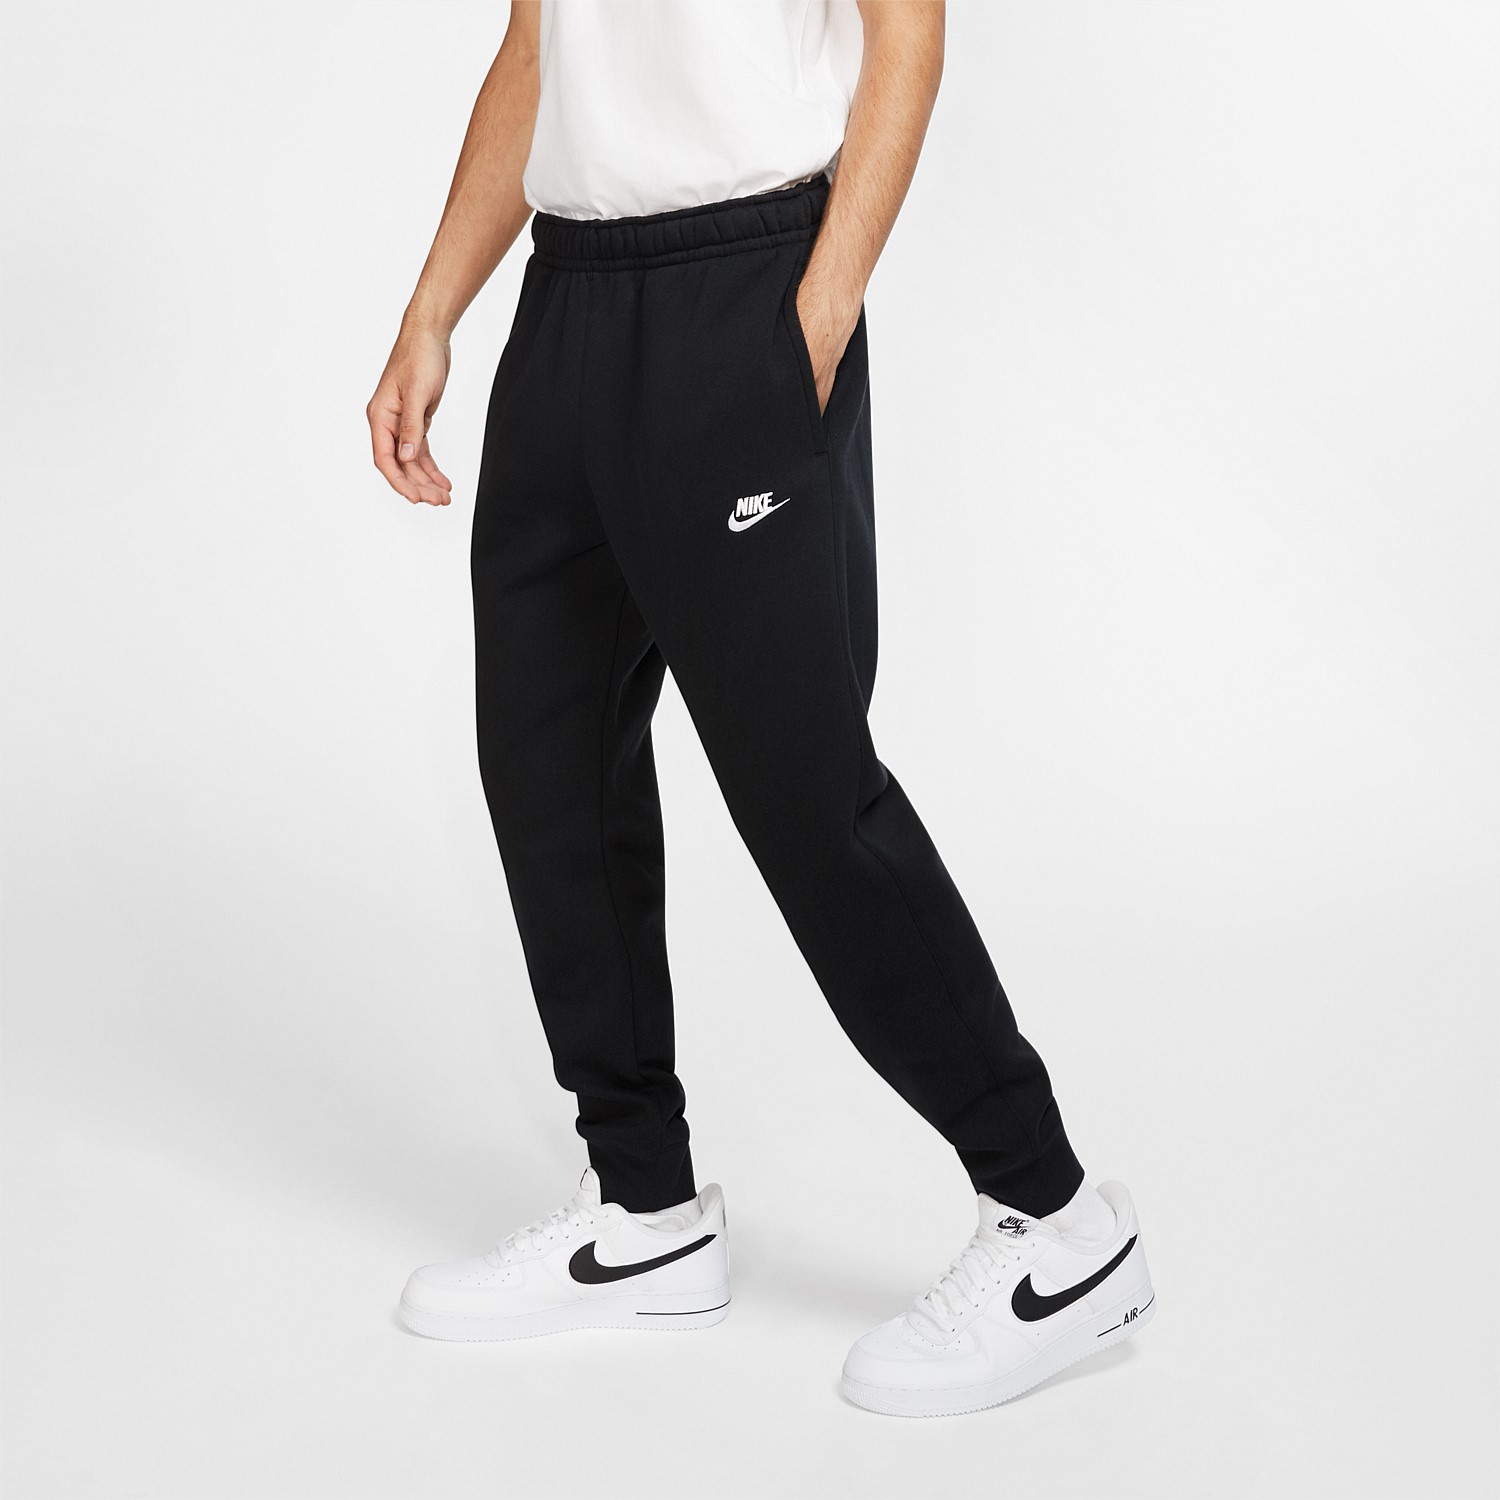 Nike The Athletic Dept Vintage Athletic Pants Mens XL Black White  Sweatpants | eBay